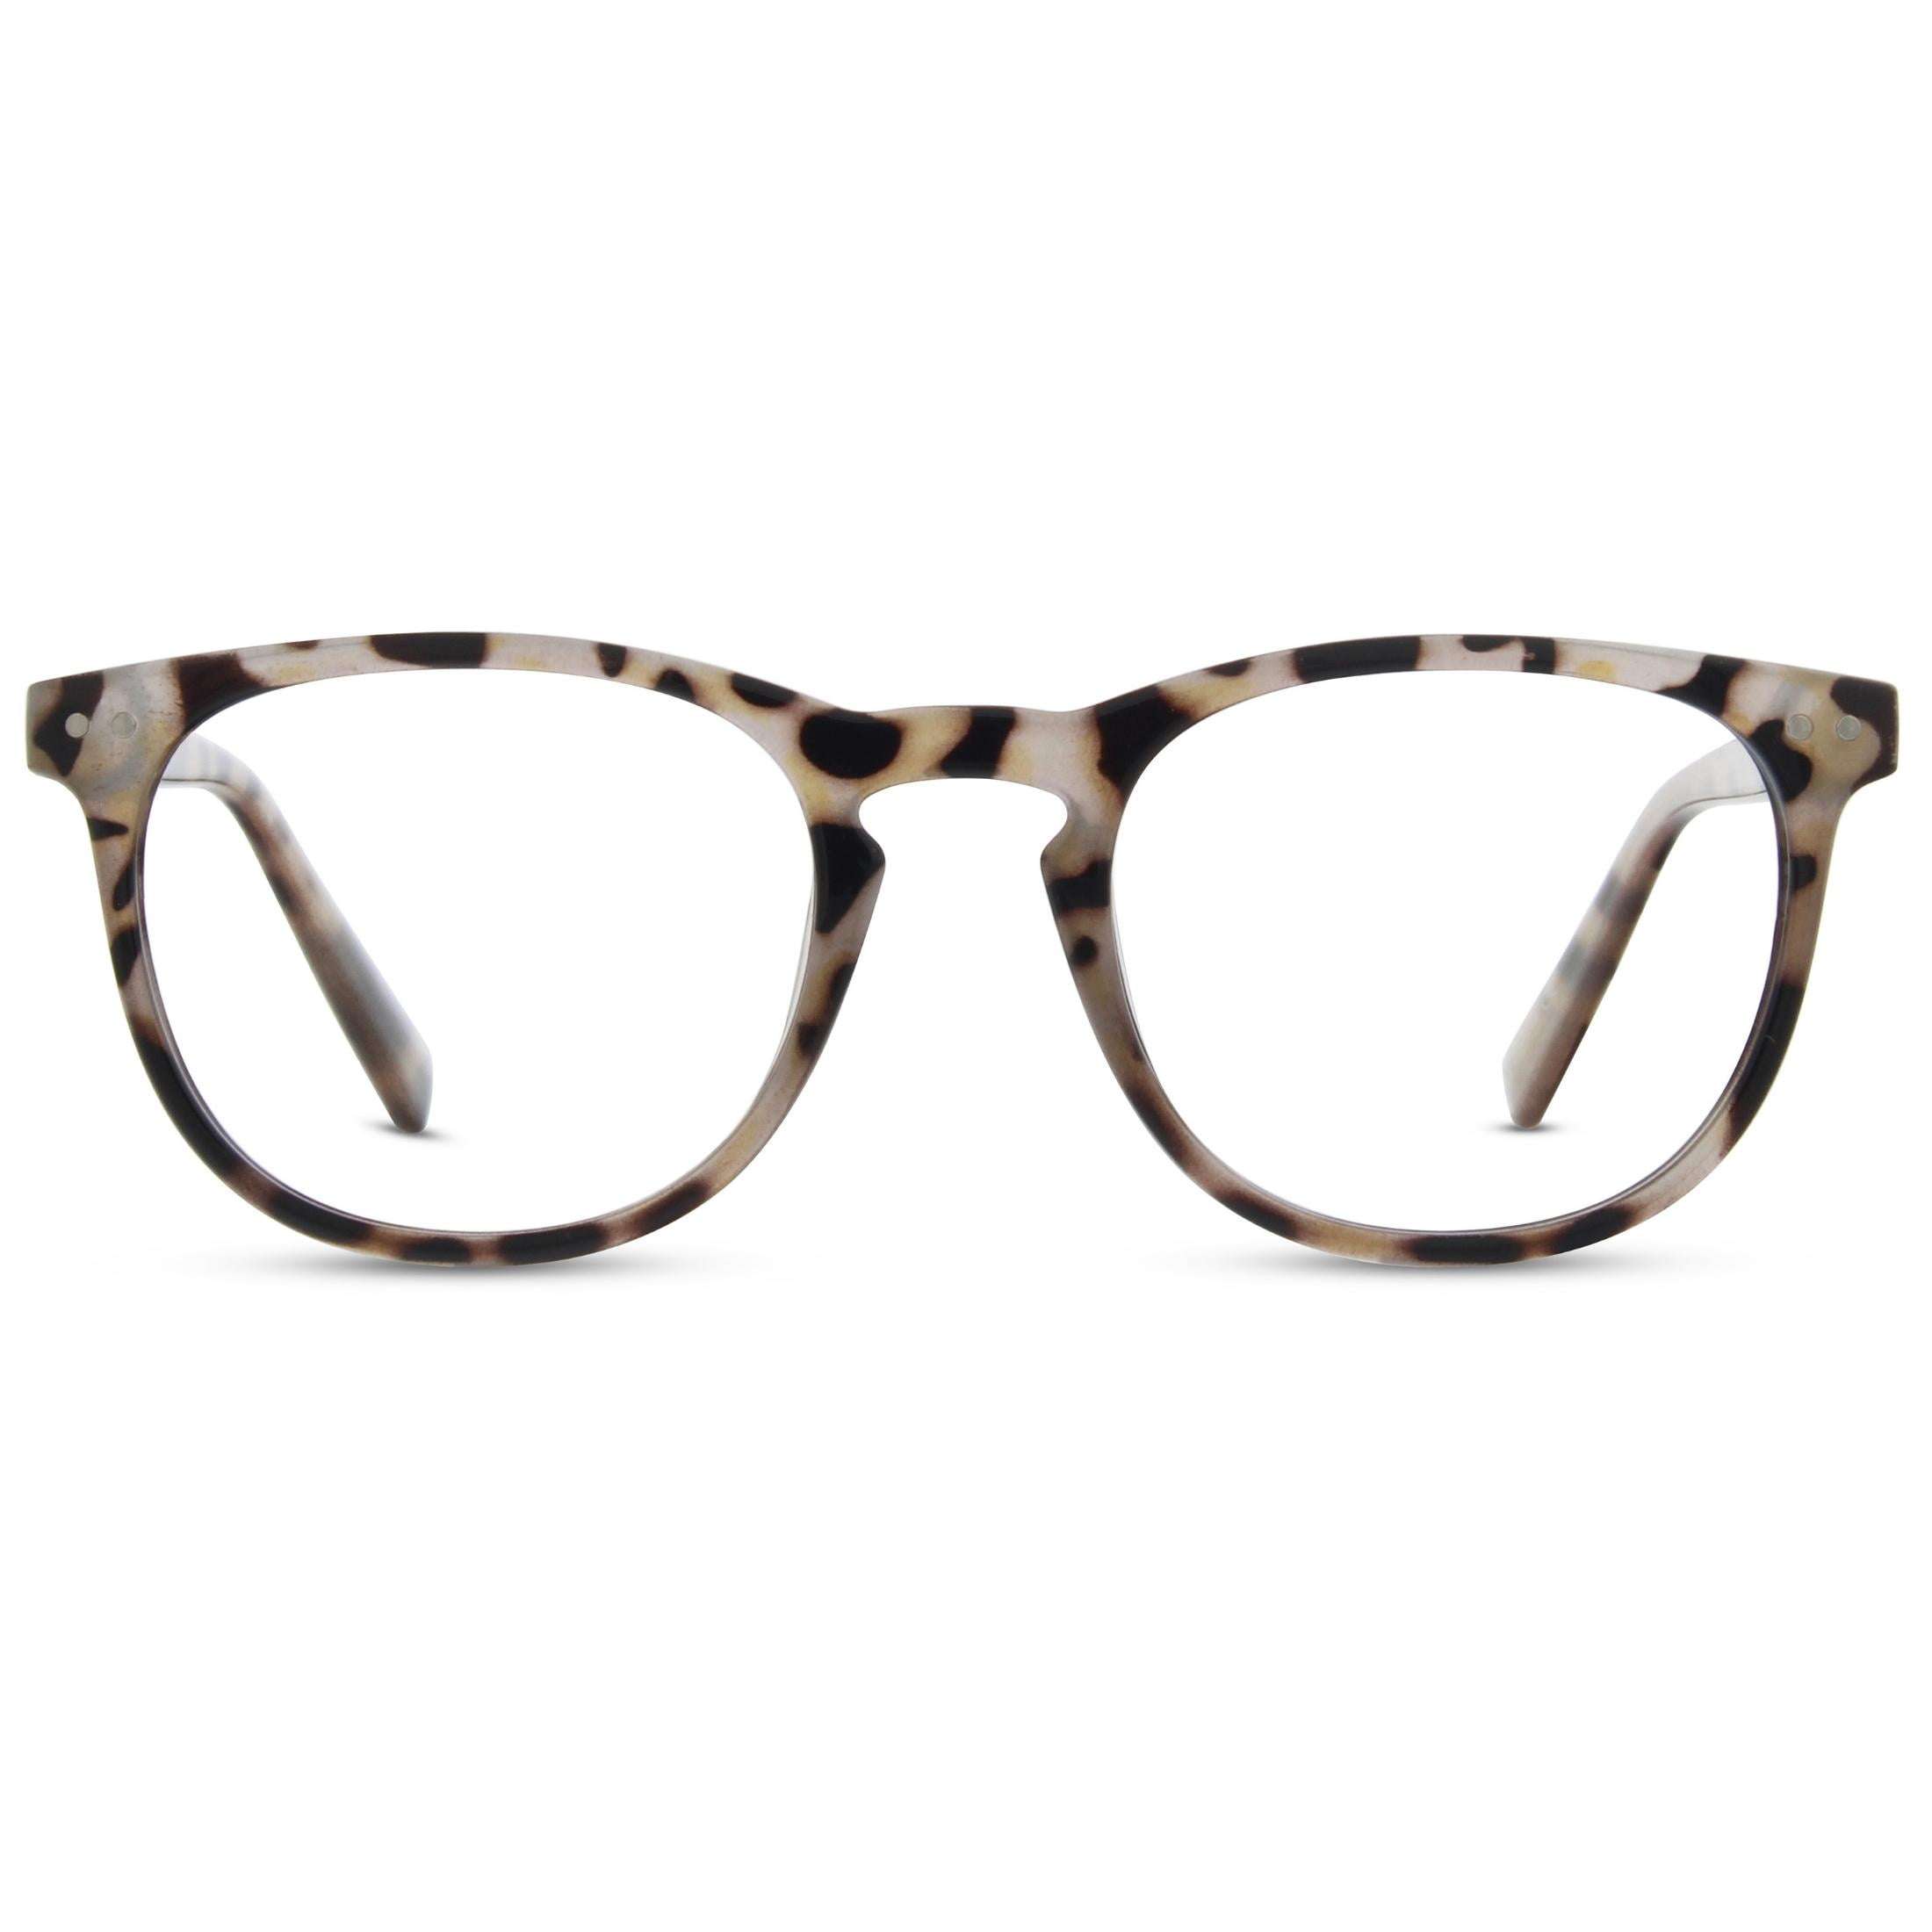 Jonas Paul Eyewear Blue Light Glasses Cream Tortoise, Magnifying ...